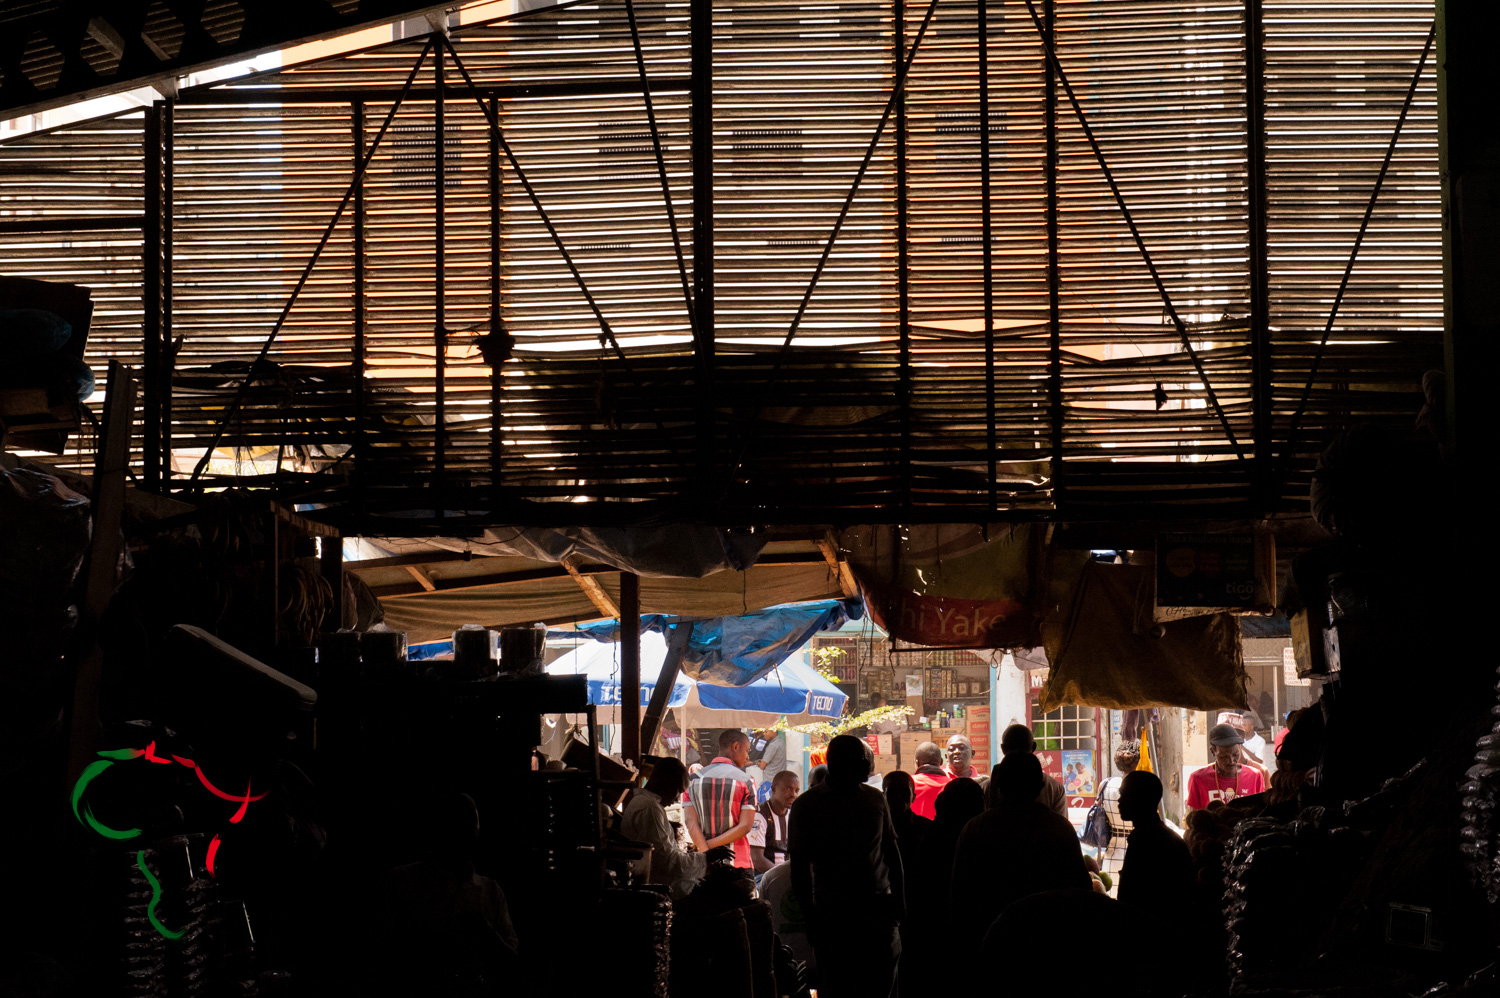 The Kariakoo Market